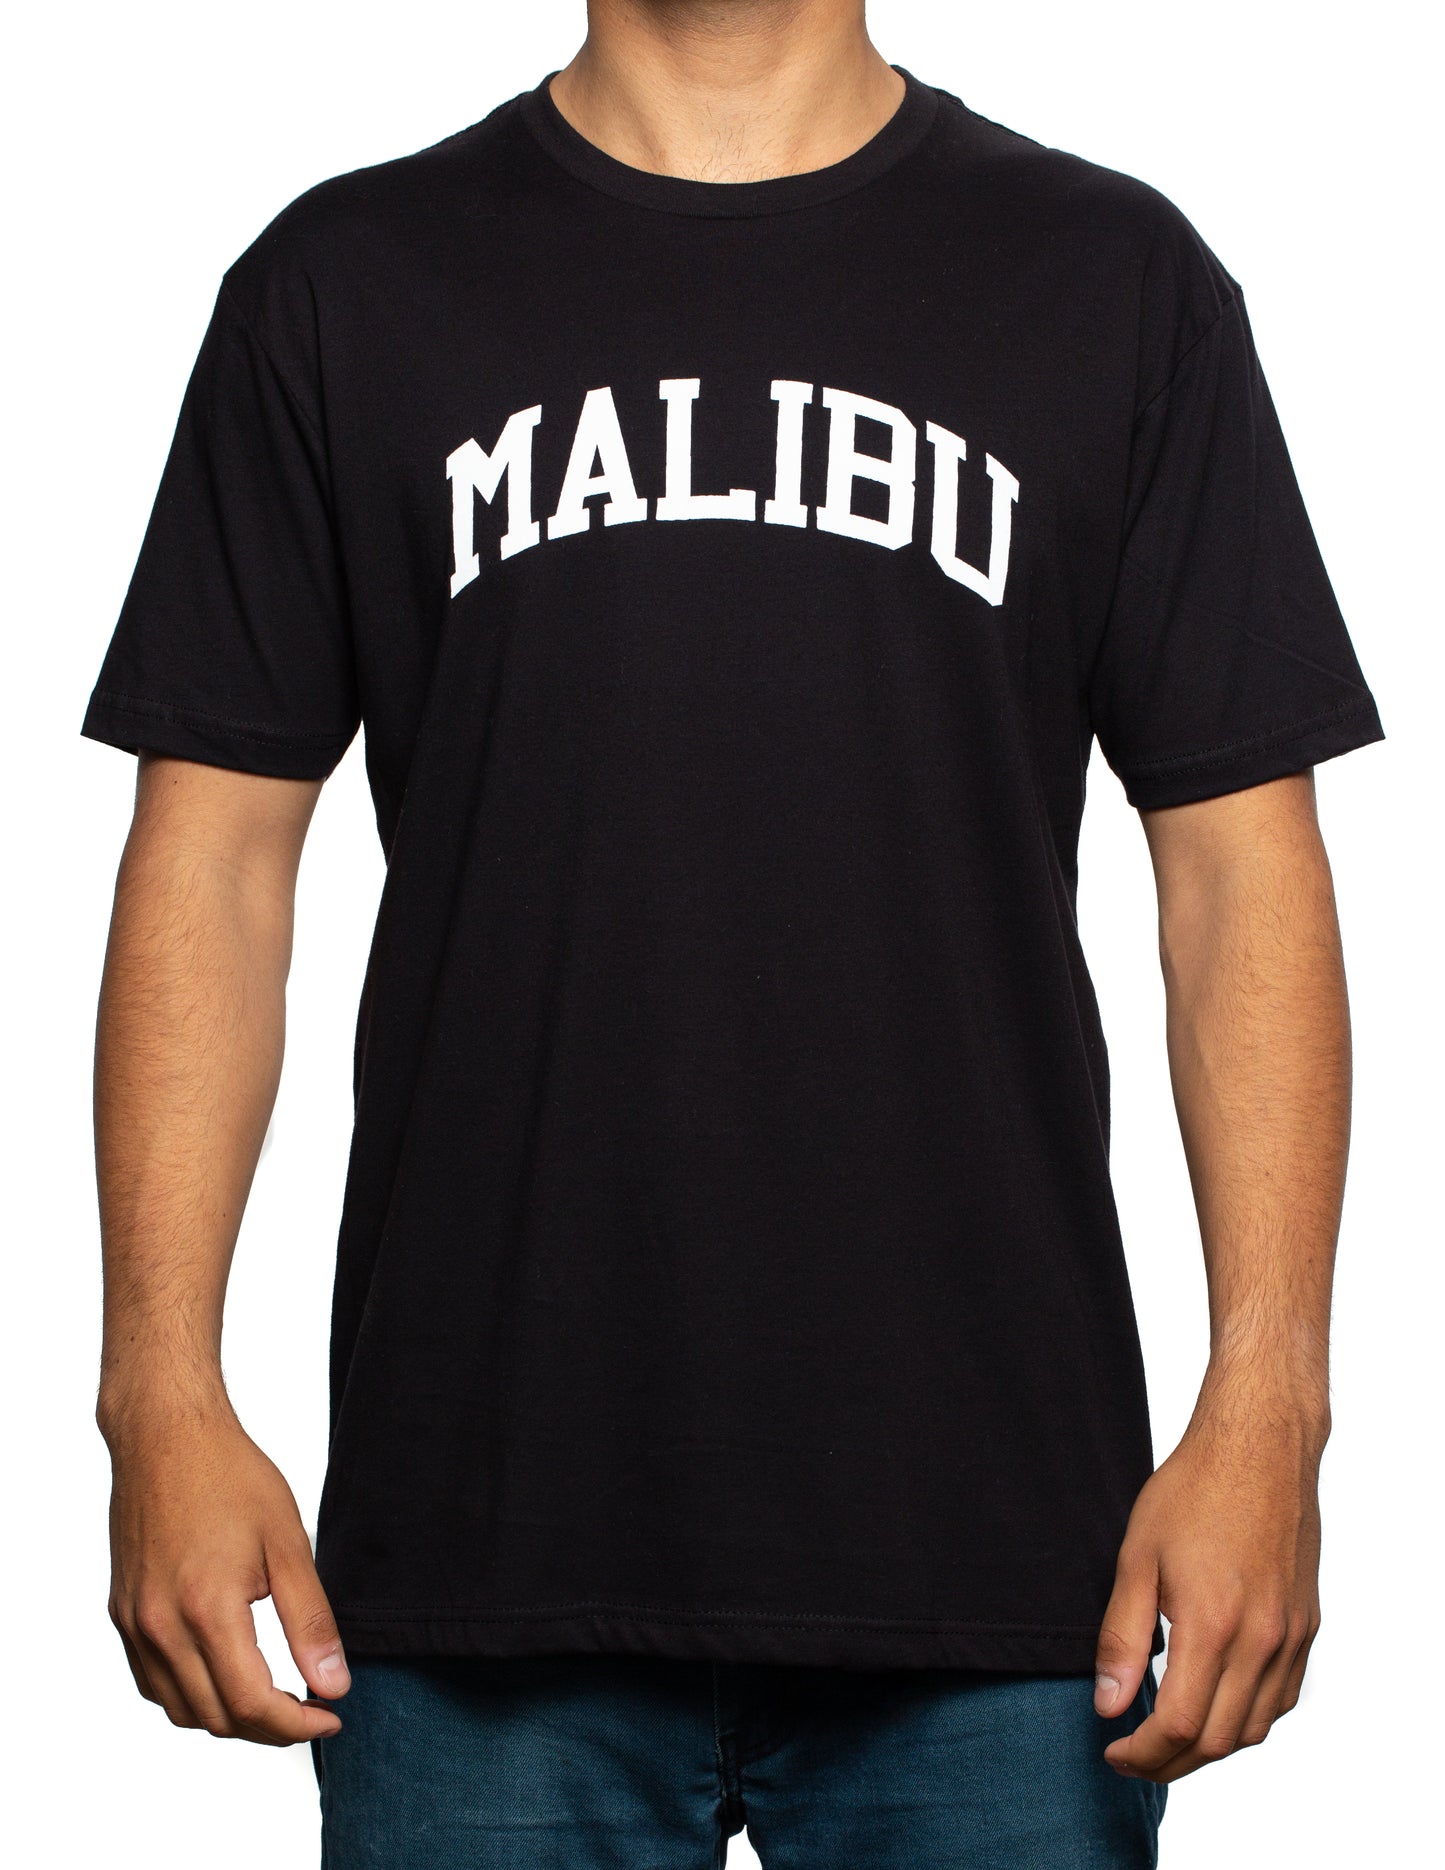 Malibu Men's Tee